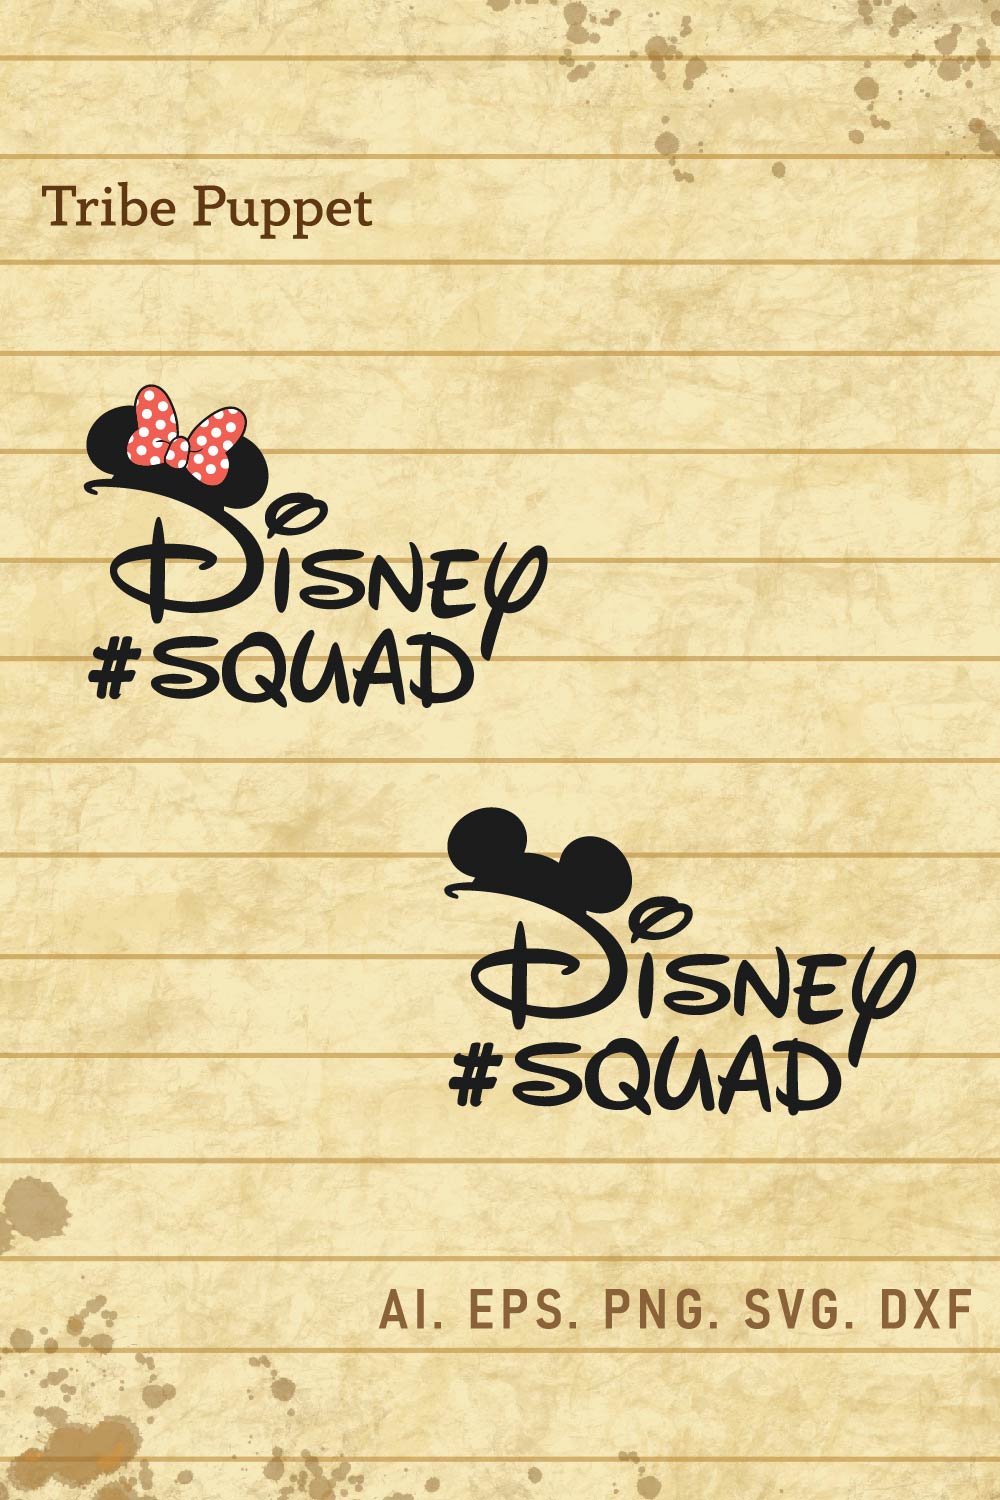 Disney Squad pinterest preview image.